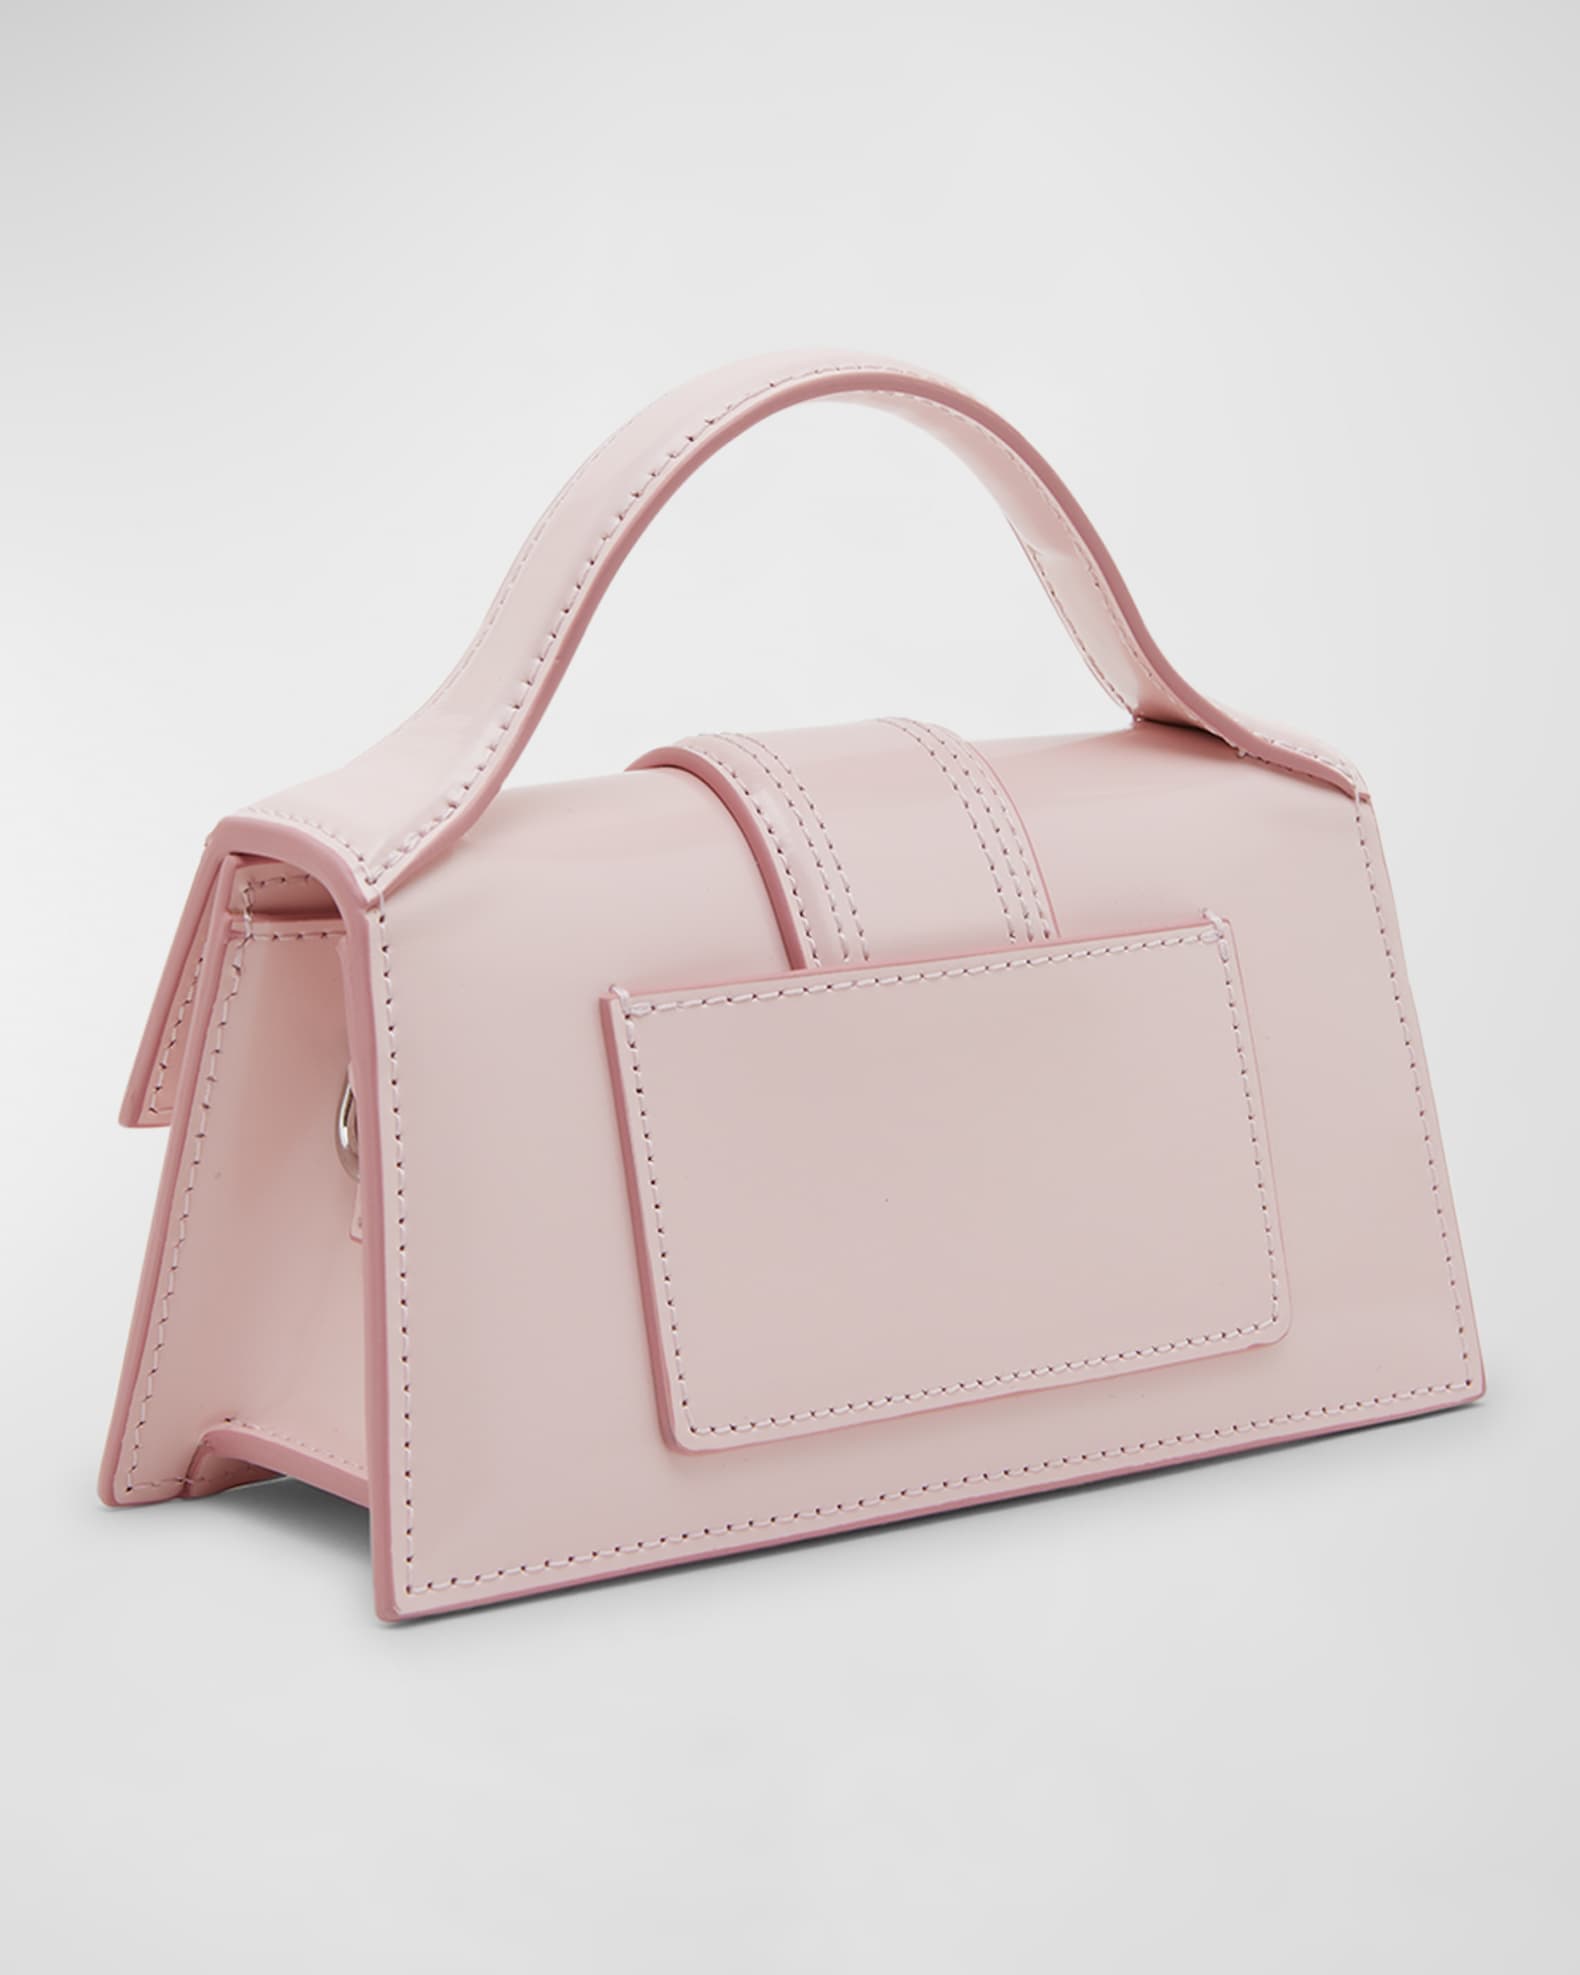 Jacquemus Le Bambino Leather Shoulder Bag | Neiman Marcus